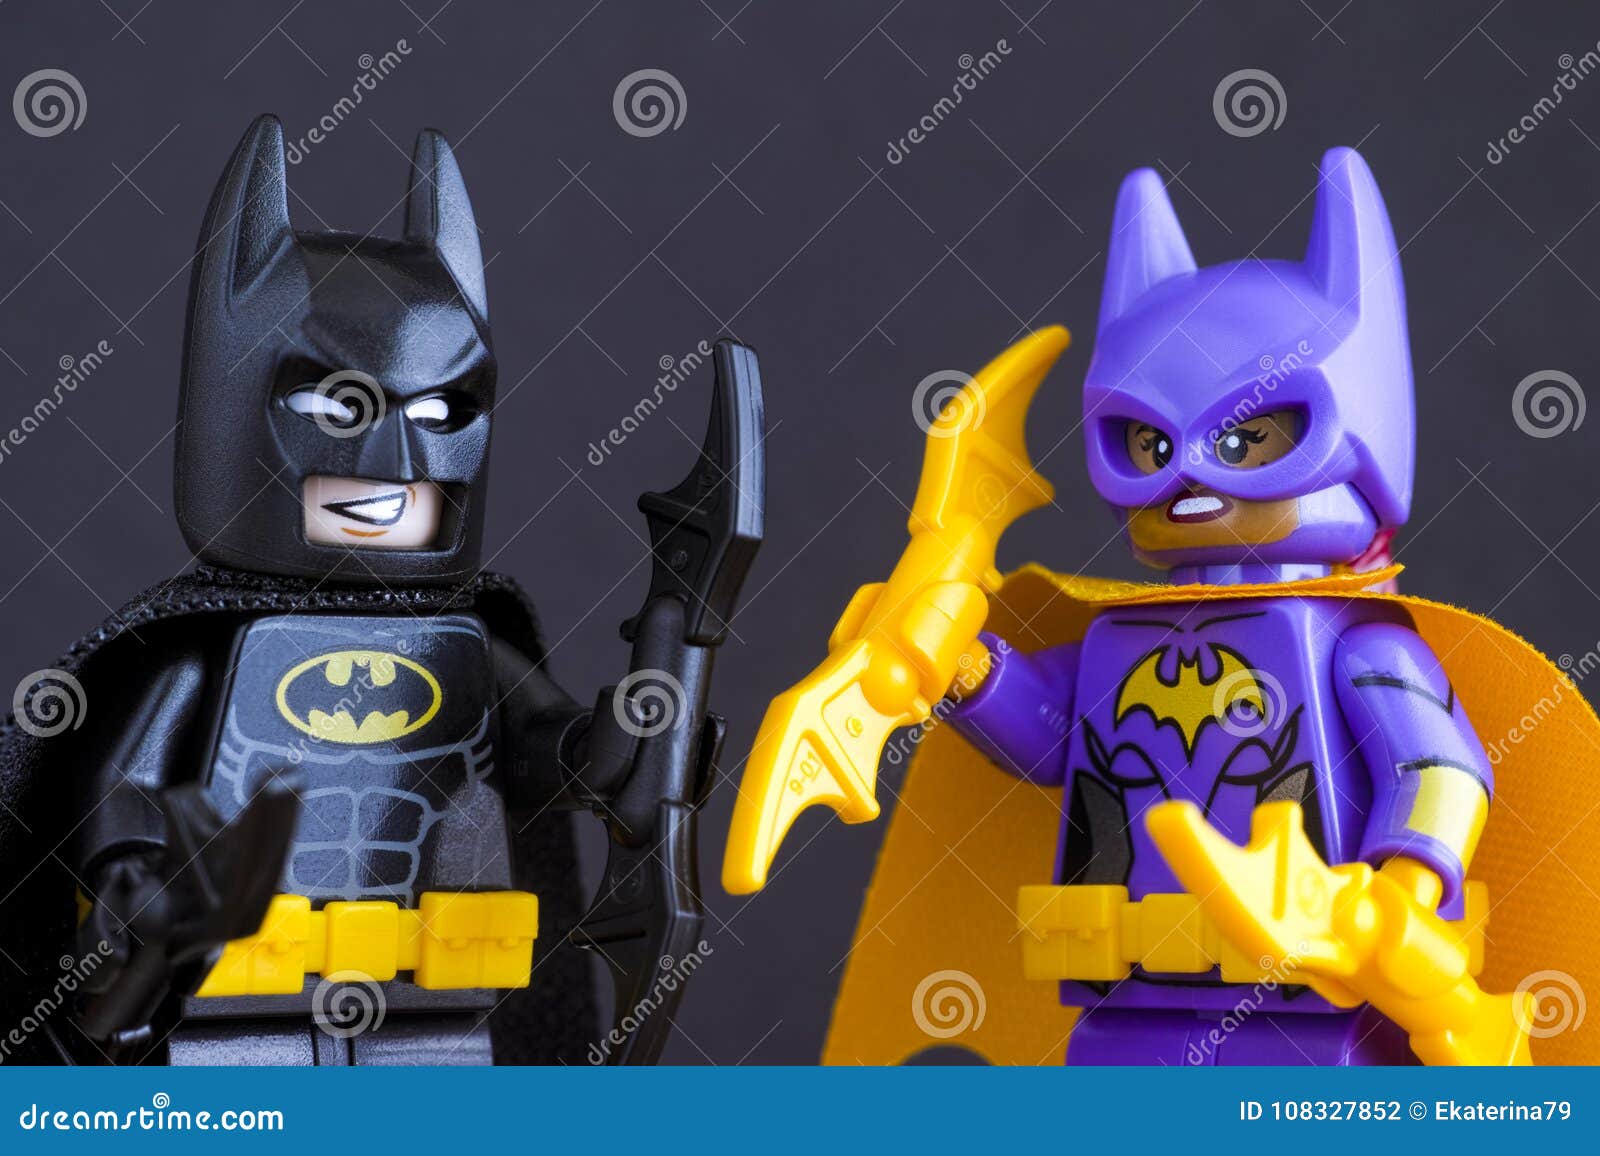 Lego Batman Movie Minifigures - Batgirl and Batman - on Black Ba Editorial  Photography - Image of purple, heroes: 108327852